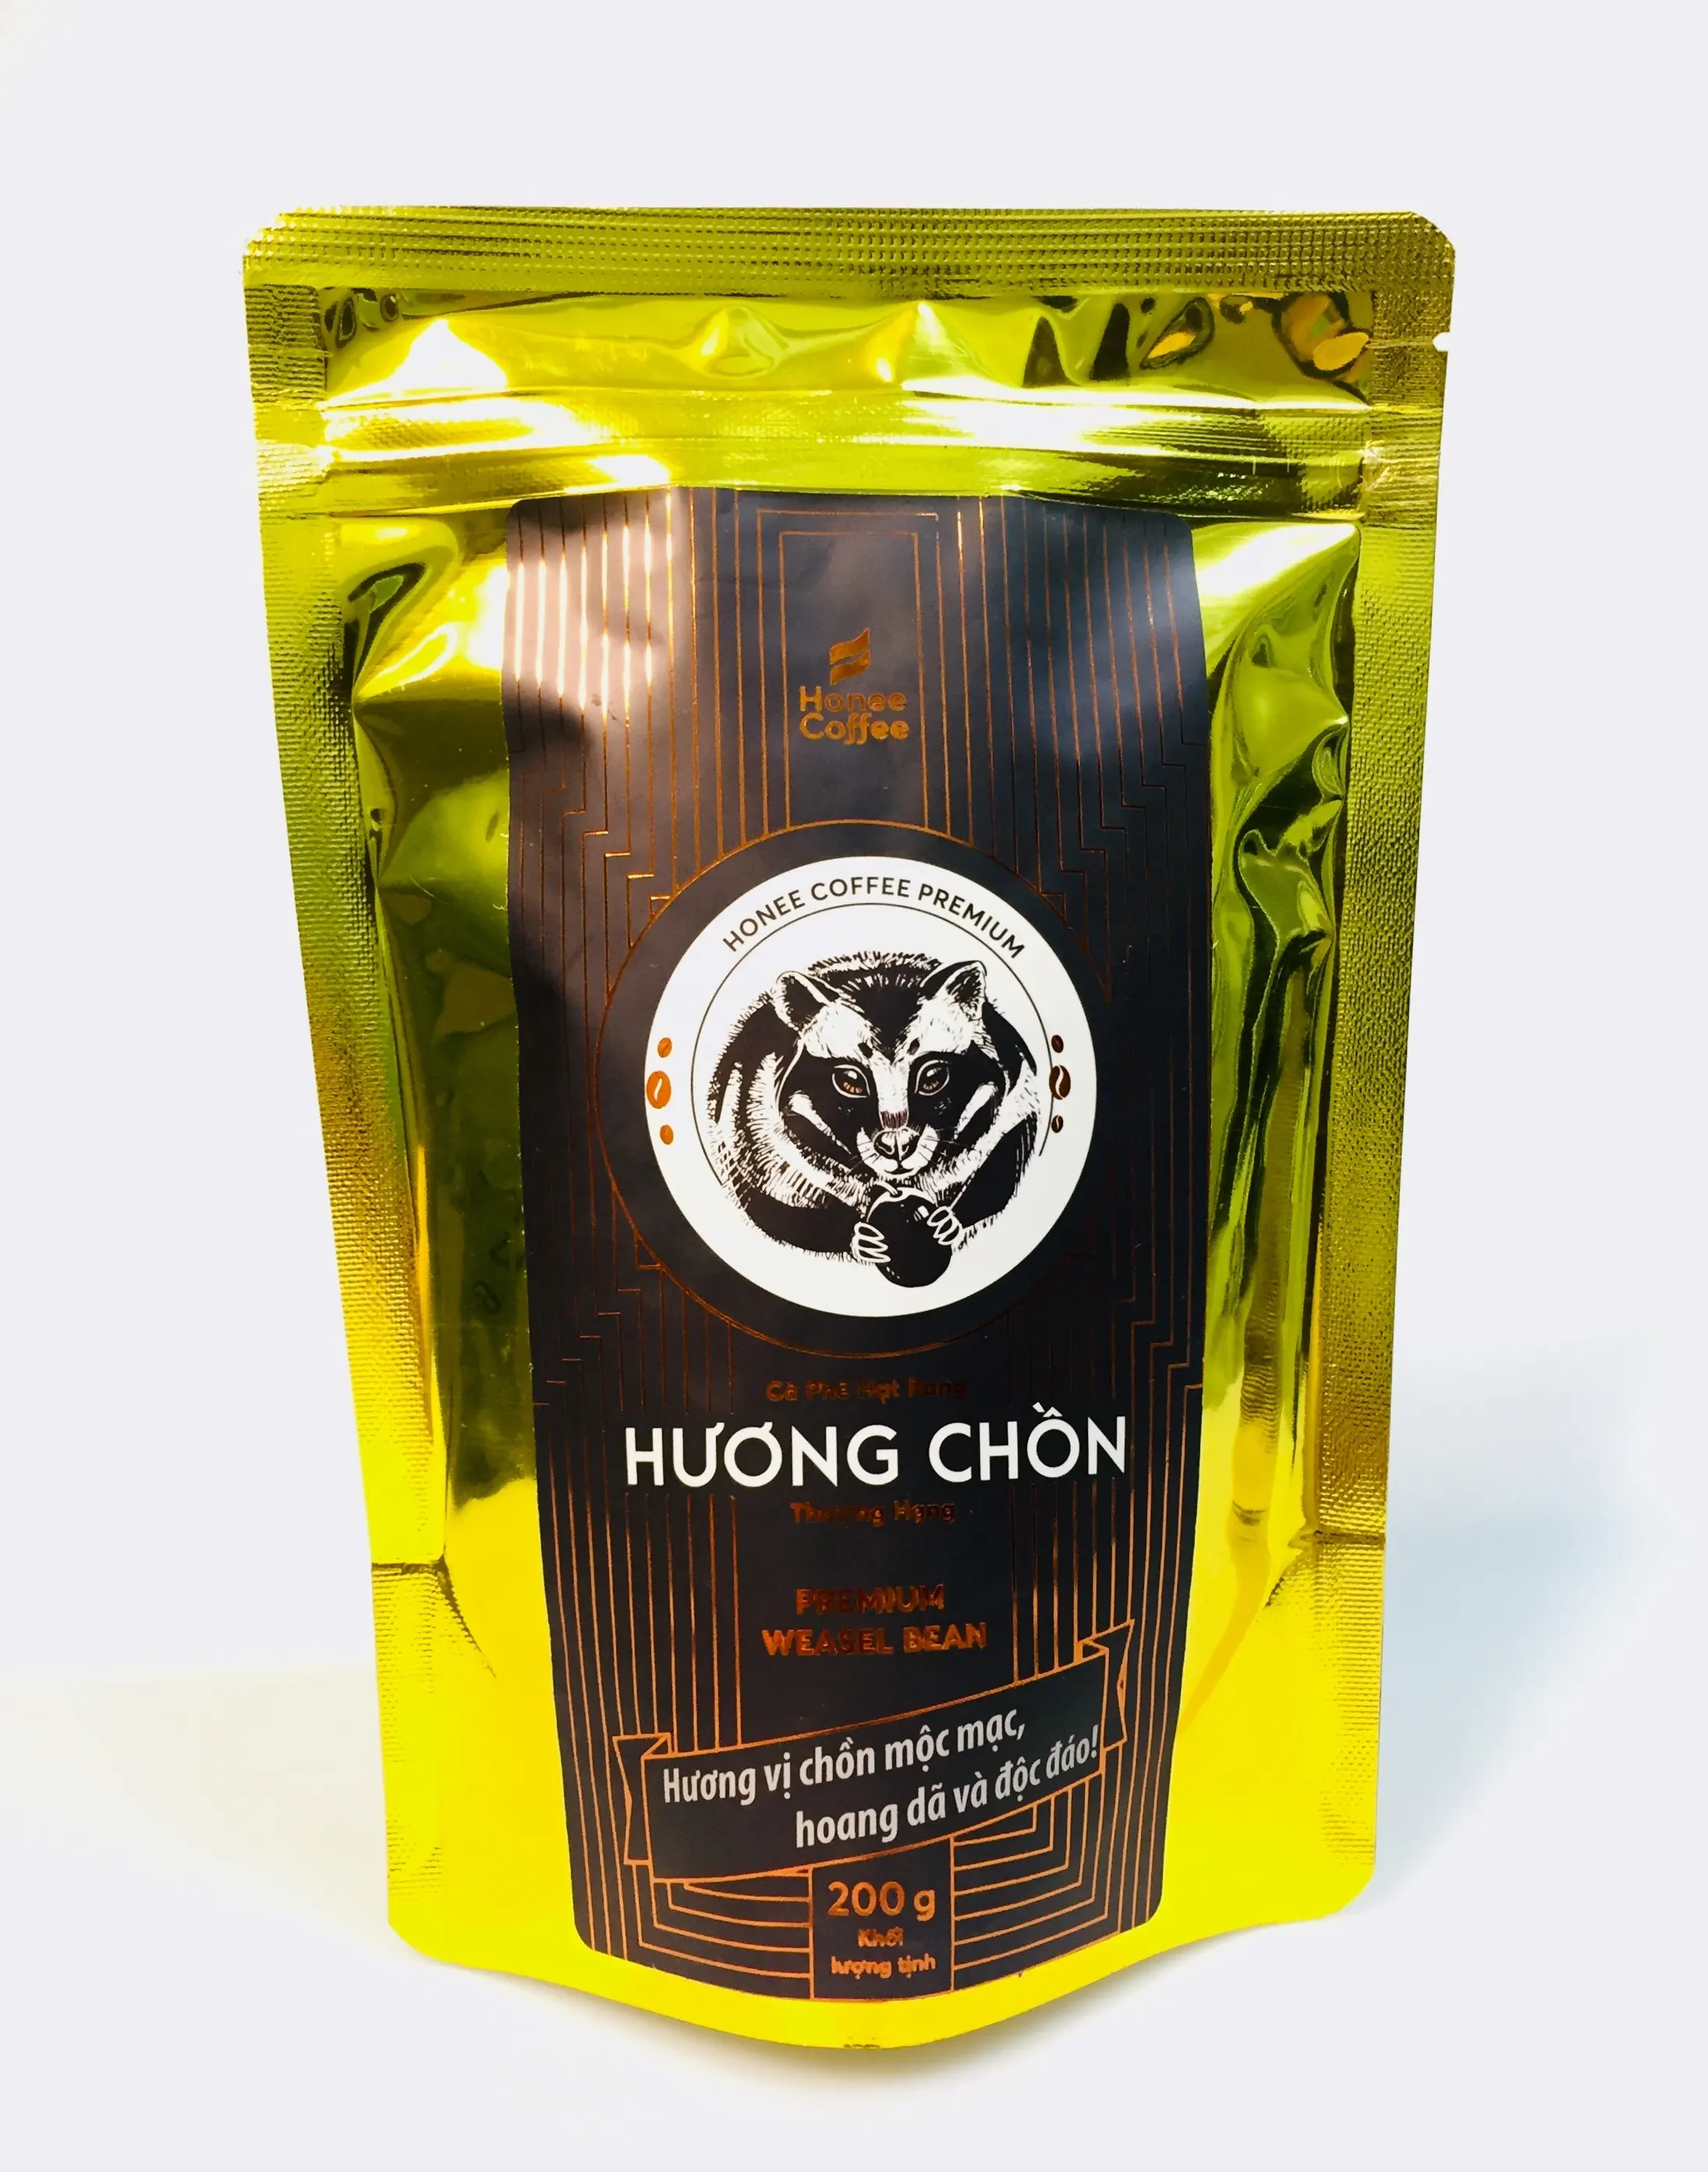 Honee कॉफी-प्रीमियम Kopi luwak प्रामाणिक नेवला कॉफी पूरे वियतनाम से-सीविट कॉफी बीन्स मध्यम भुना